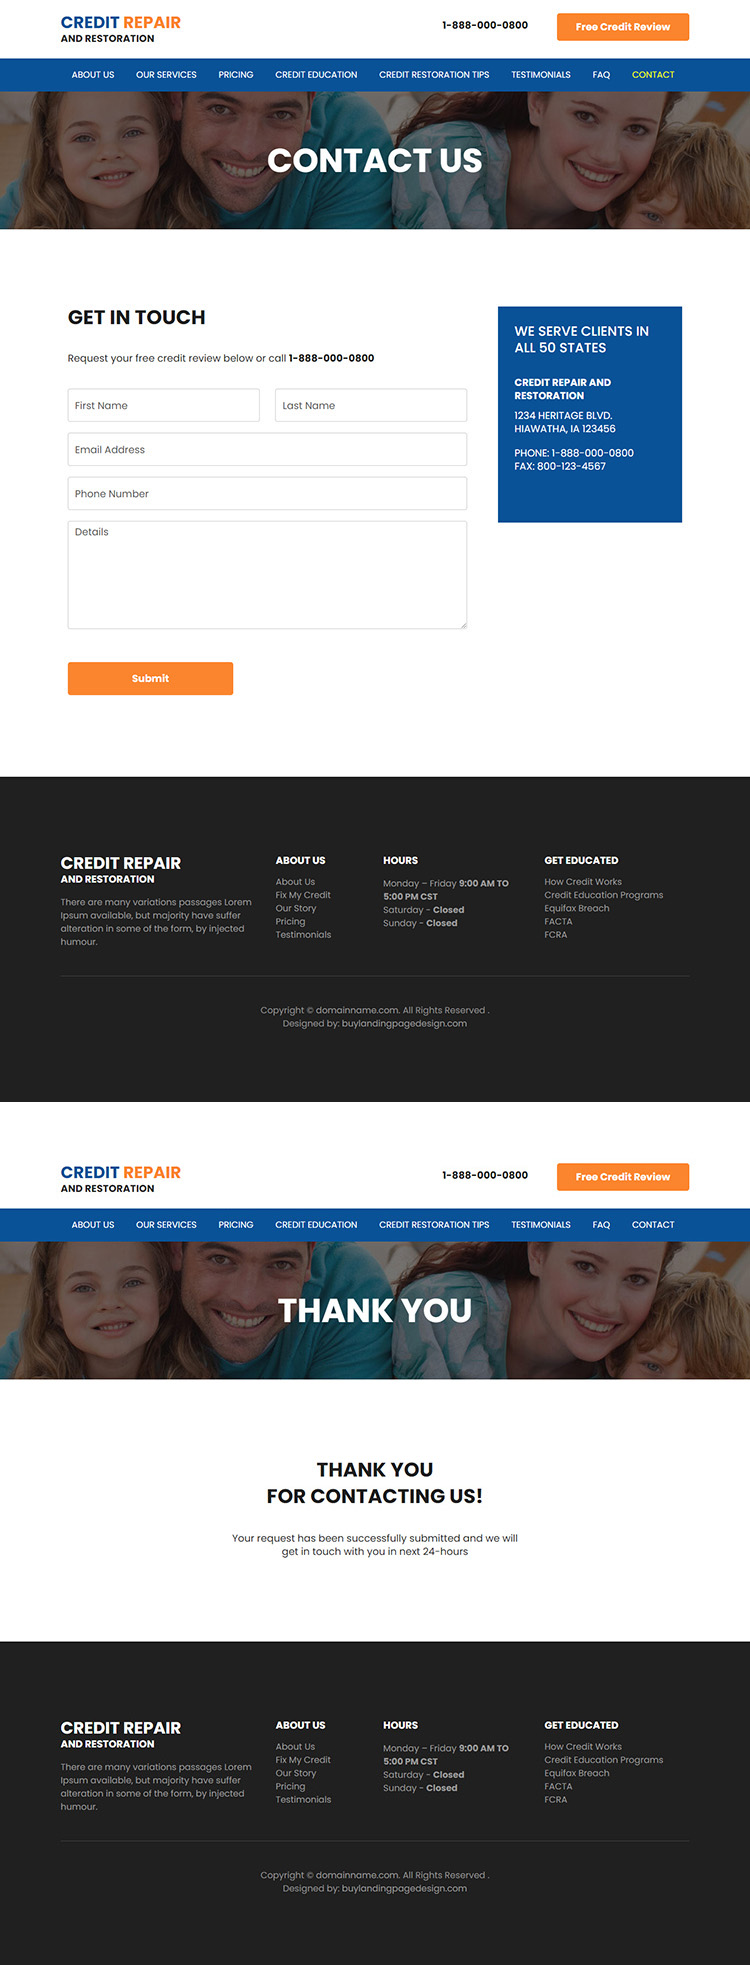 credit repair and restoration service responsive website design